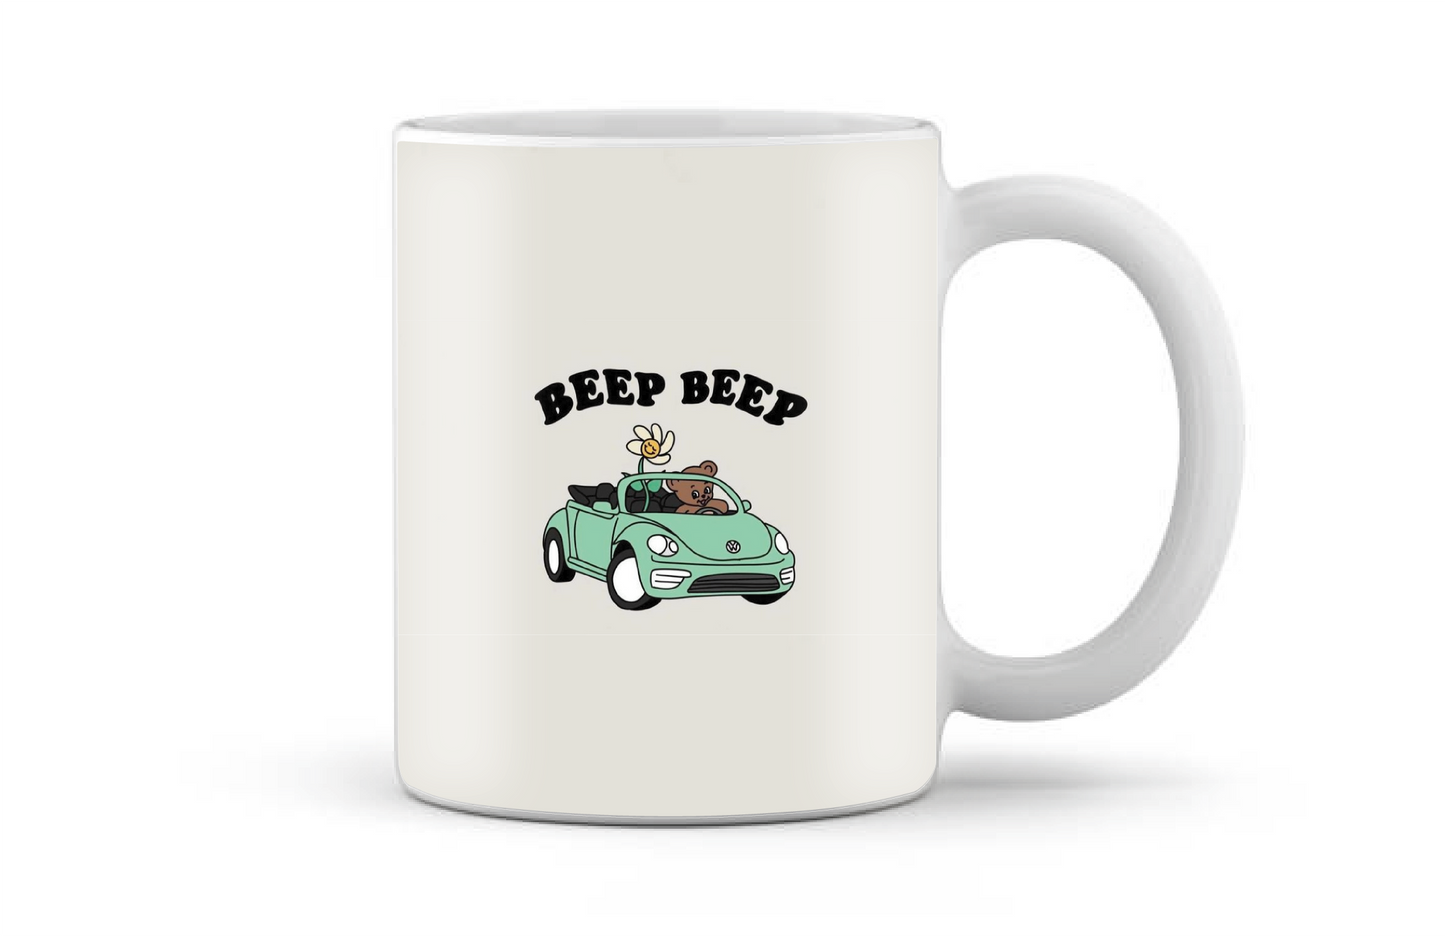 Beep Beep - Mug white